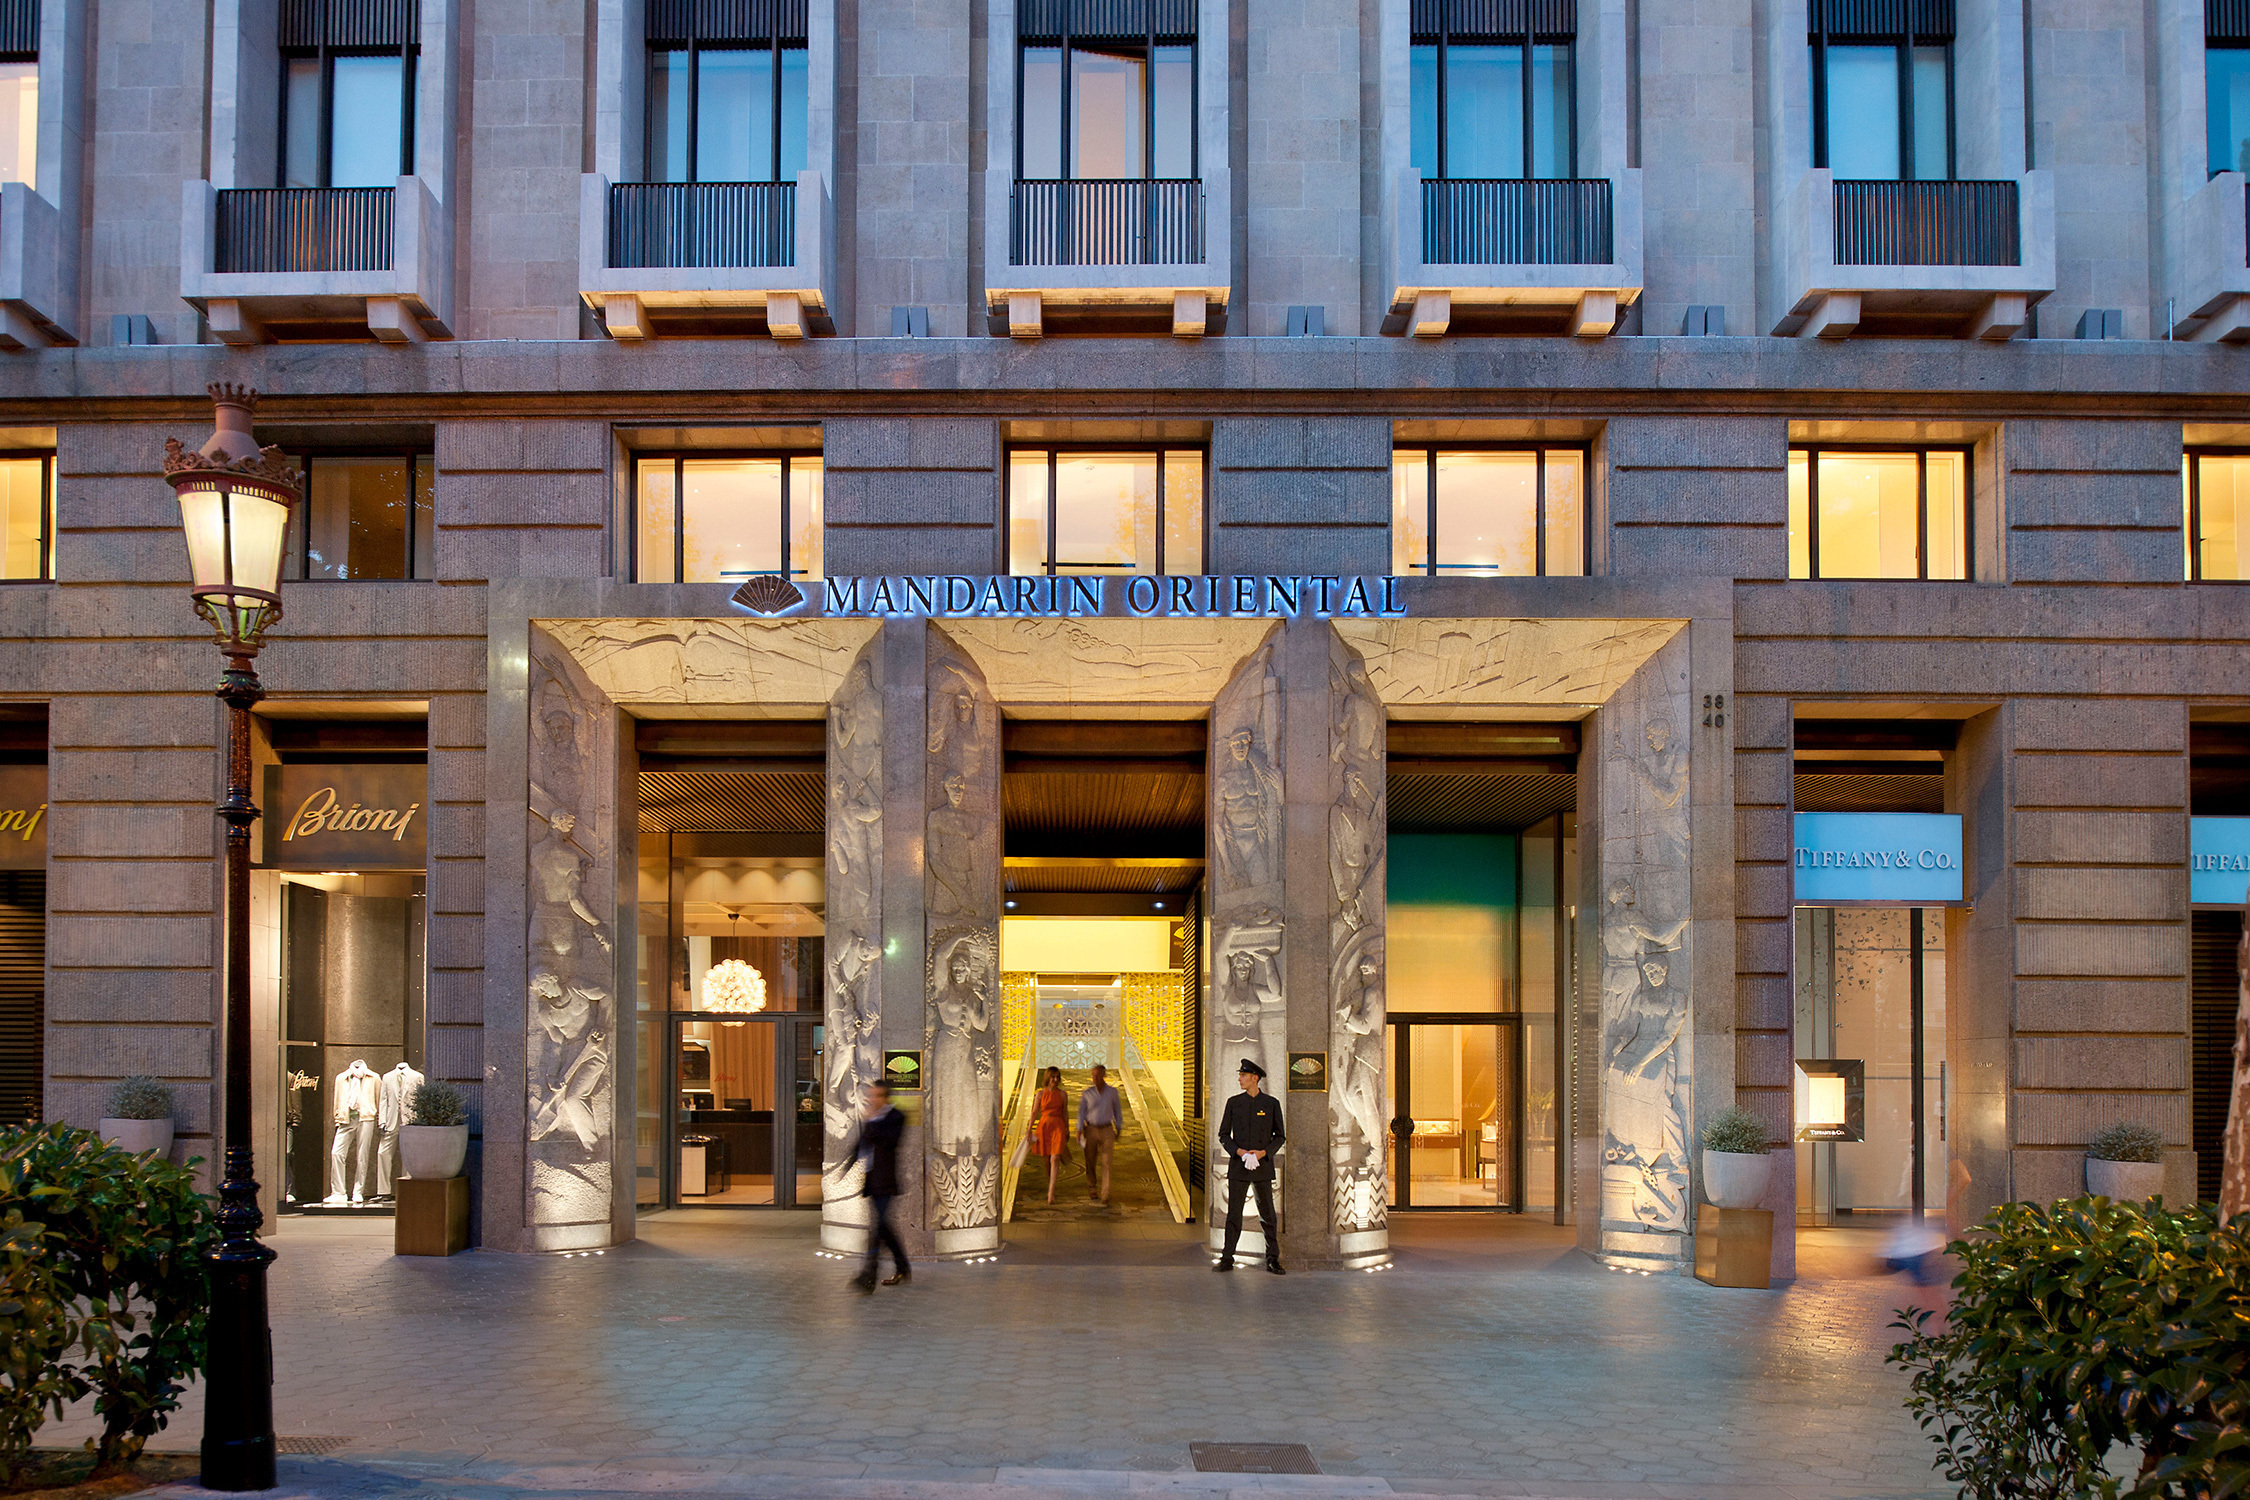 Image of the Mandarin Oriental hotel in Barcelona.